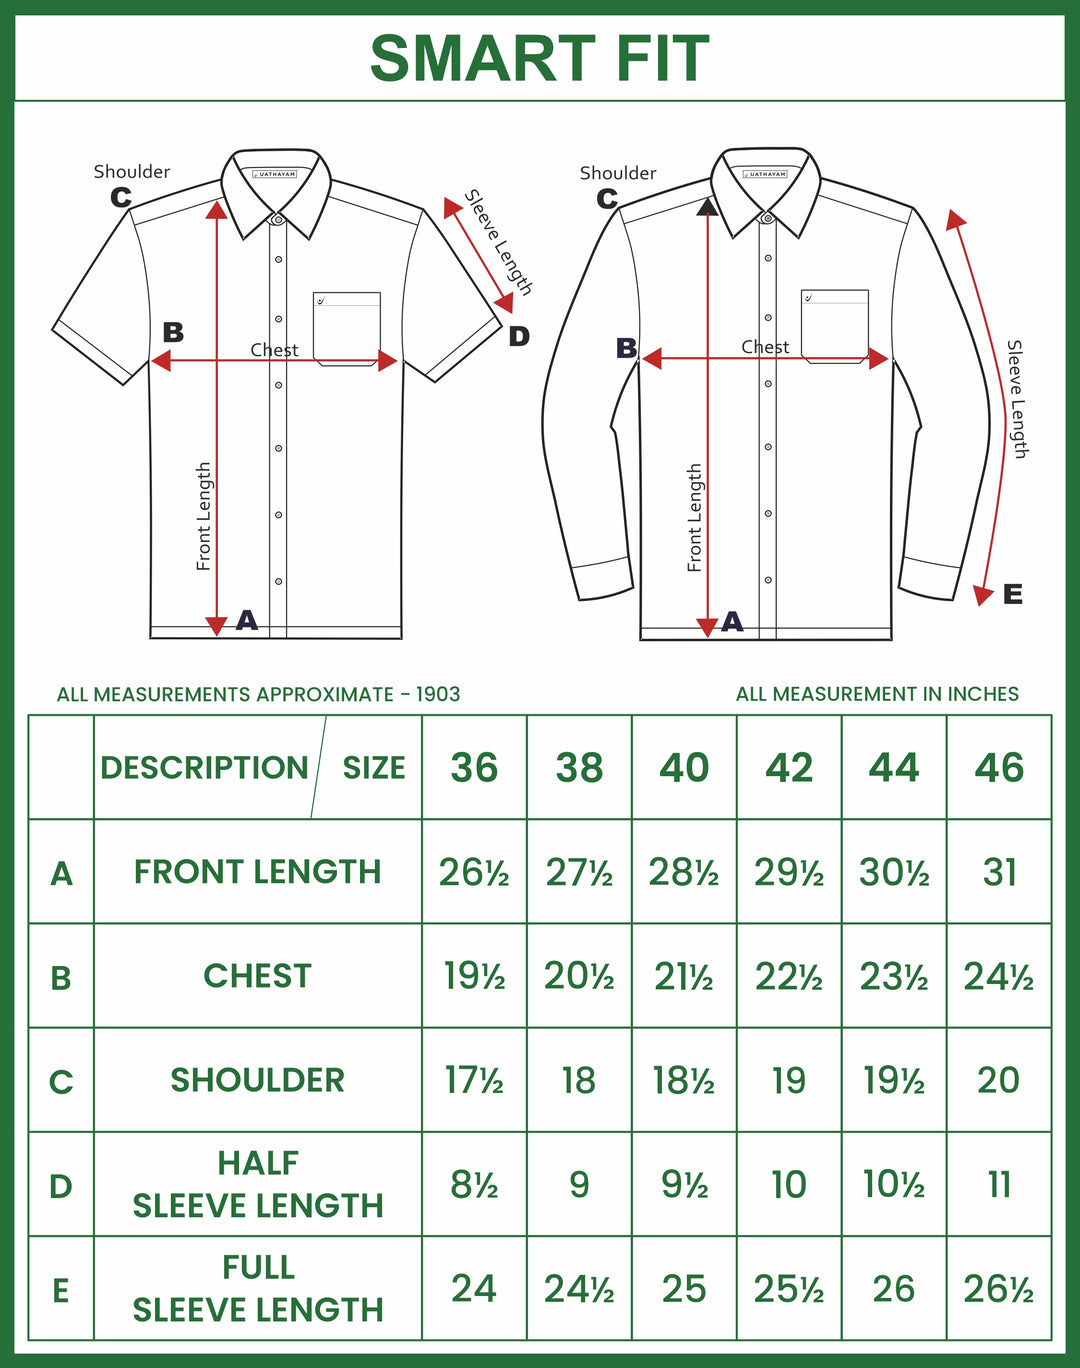 Men's Solid Cotton Linen Full Sleeve Shirts - Summer Green LC10105F